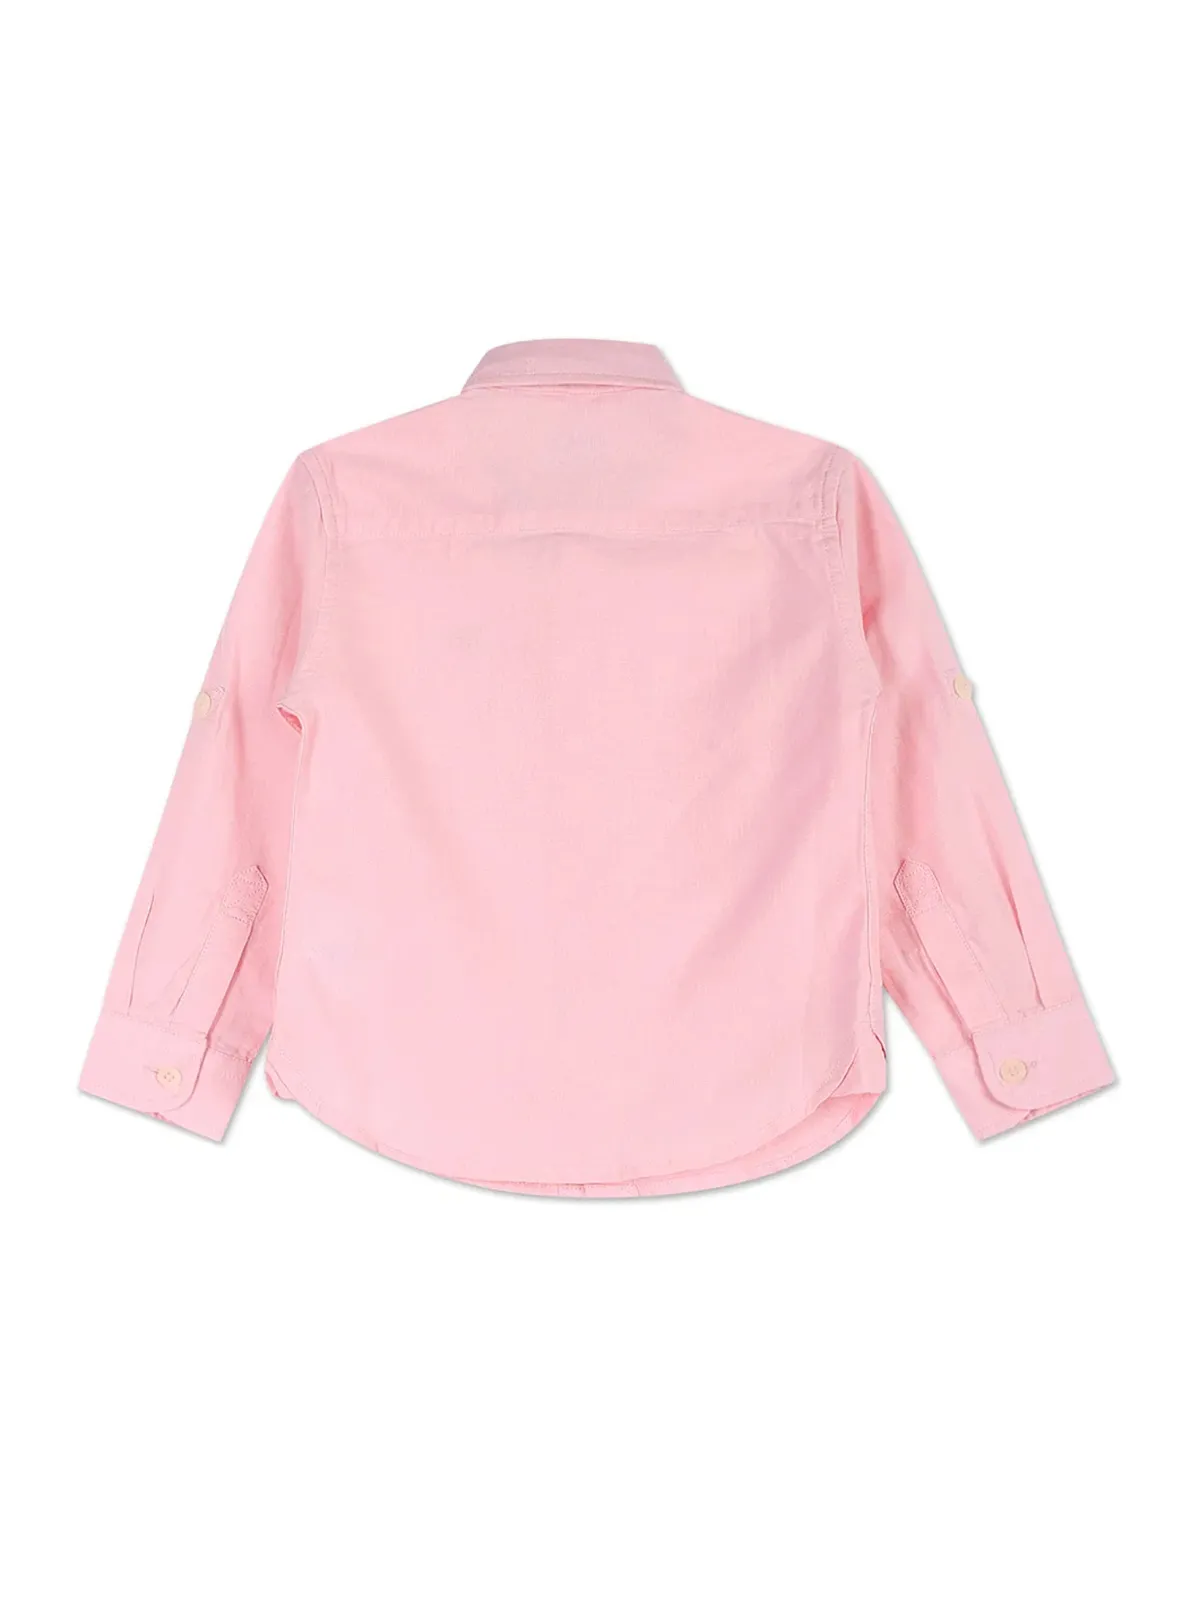 U S POLO ASSN baby pink full sleeves shirt